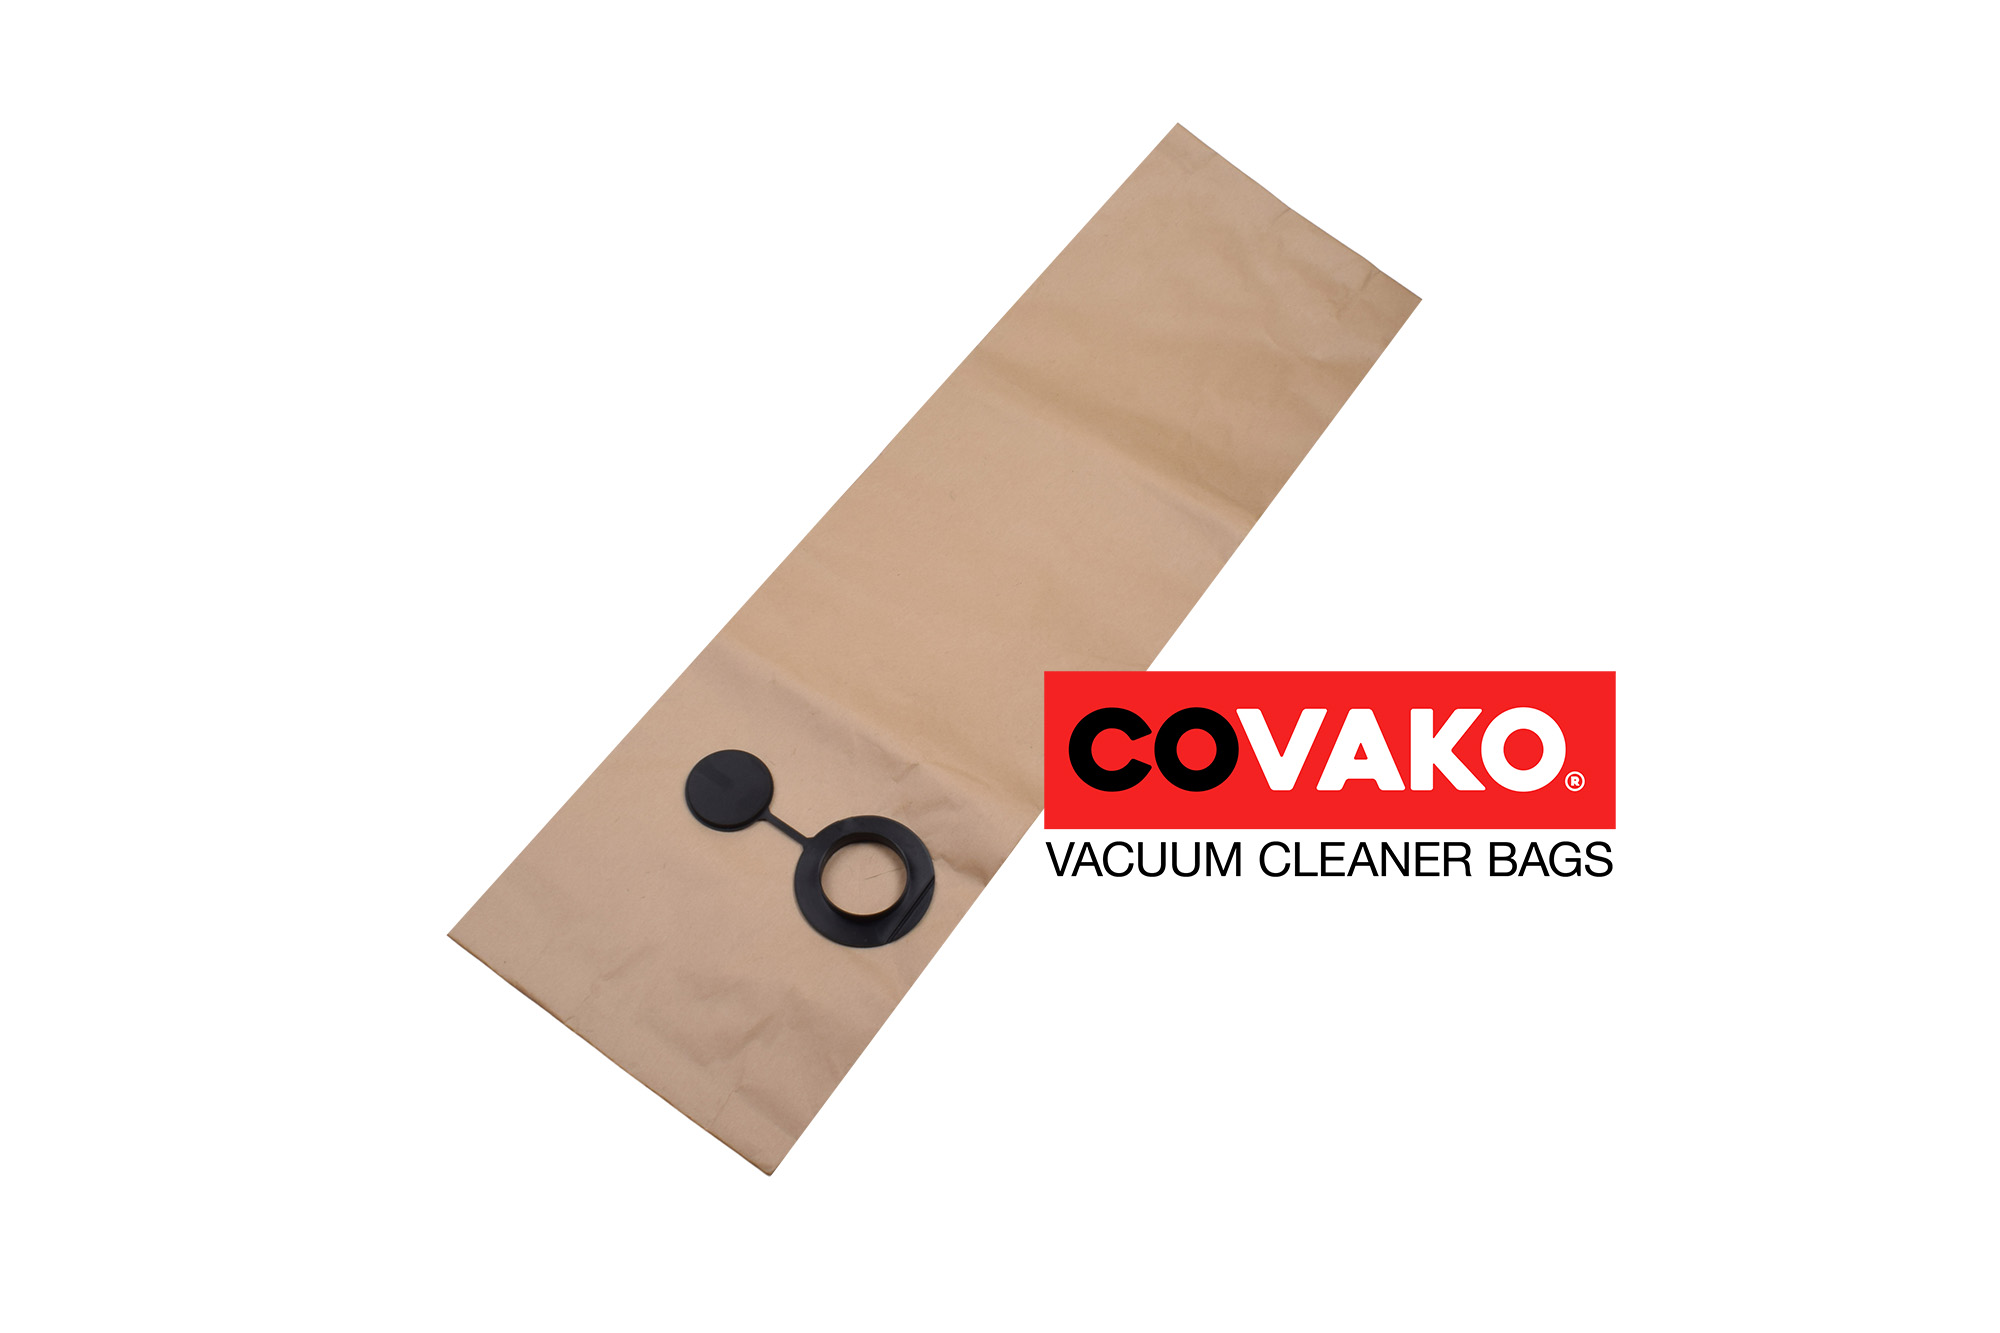 Protool SR 5 / Paper - Protool vacuum cleaner bags